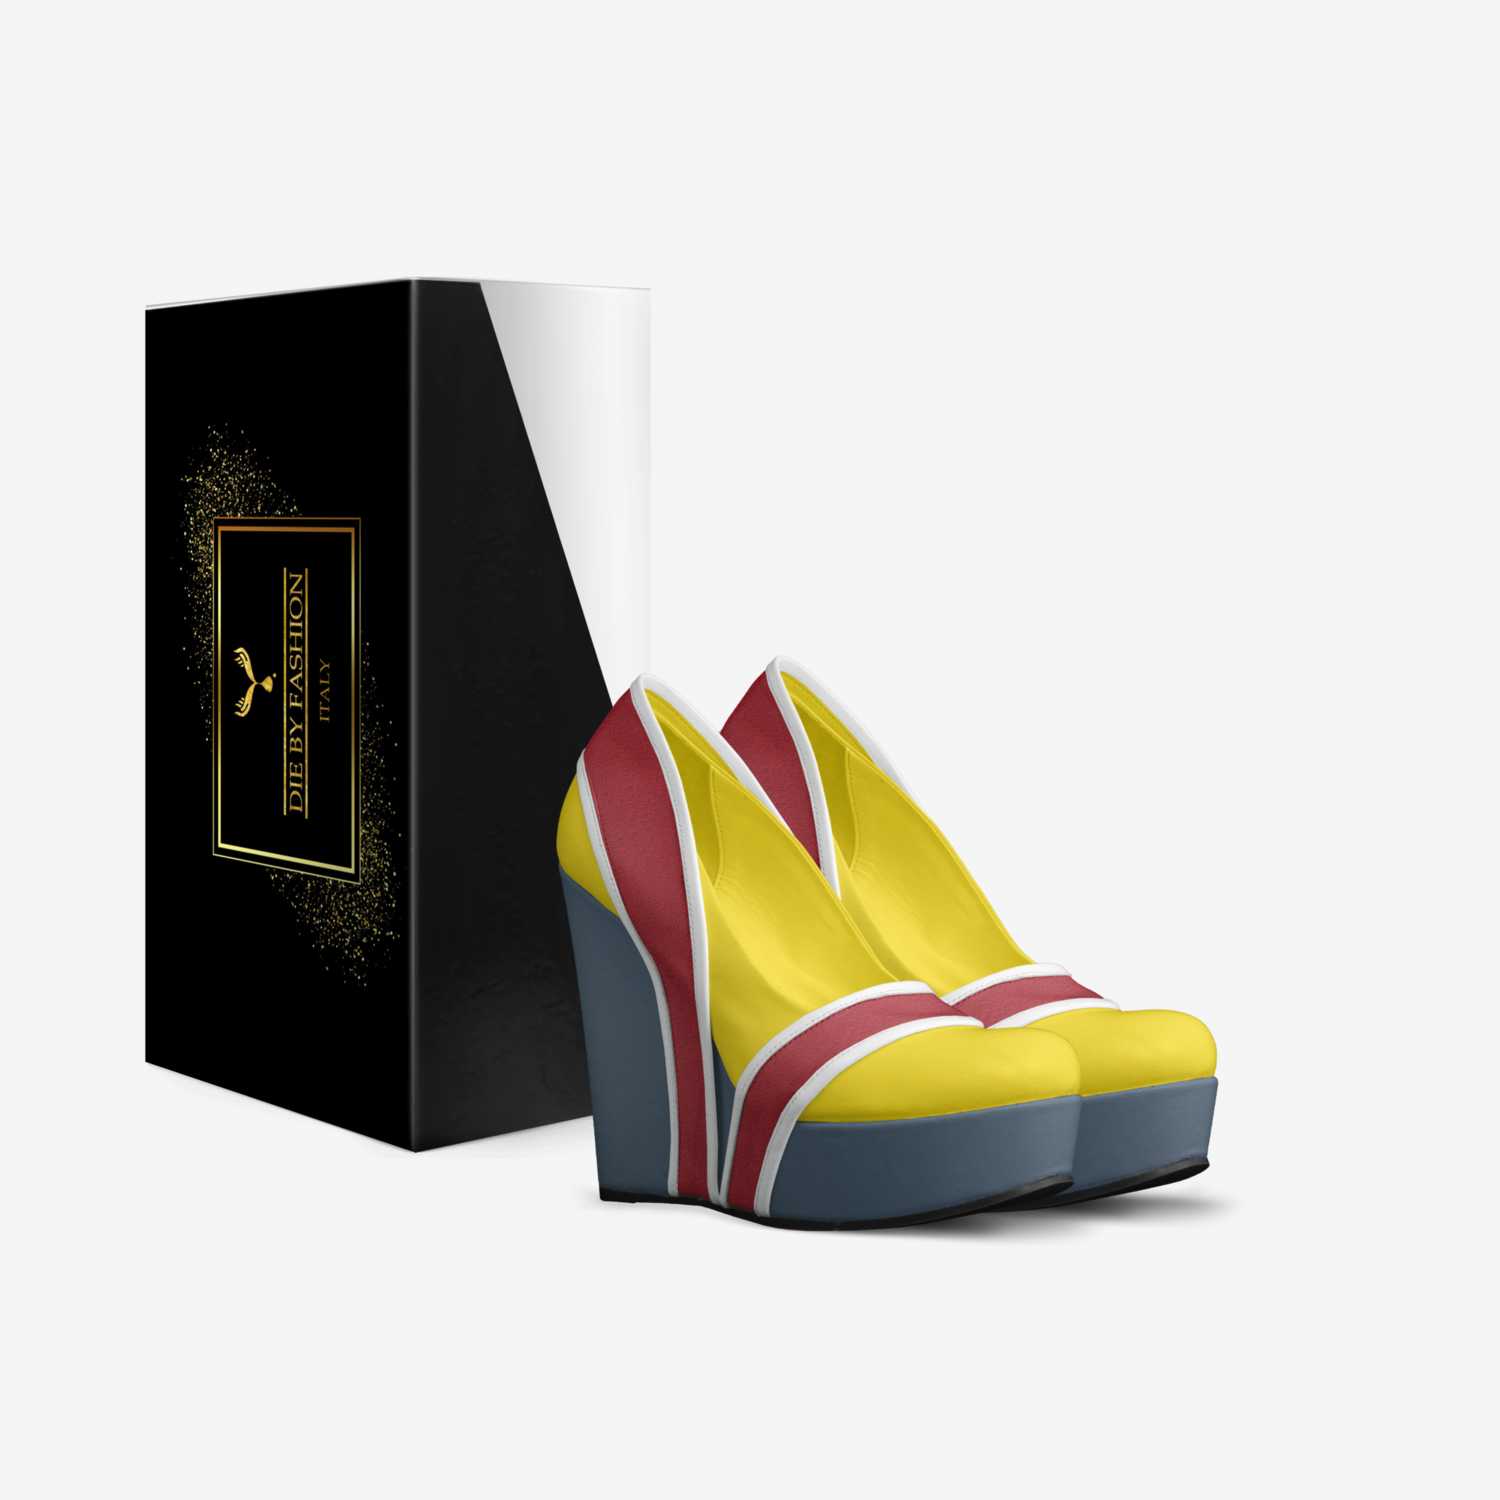 angelones custom made in Italy shoes by Rasheeda Socolove | Box view